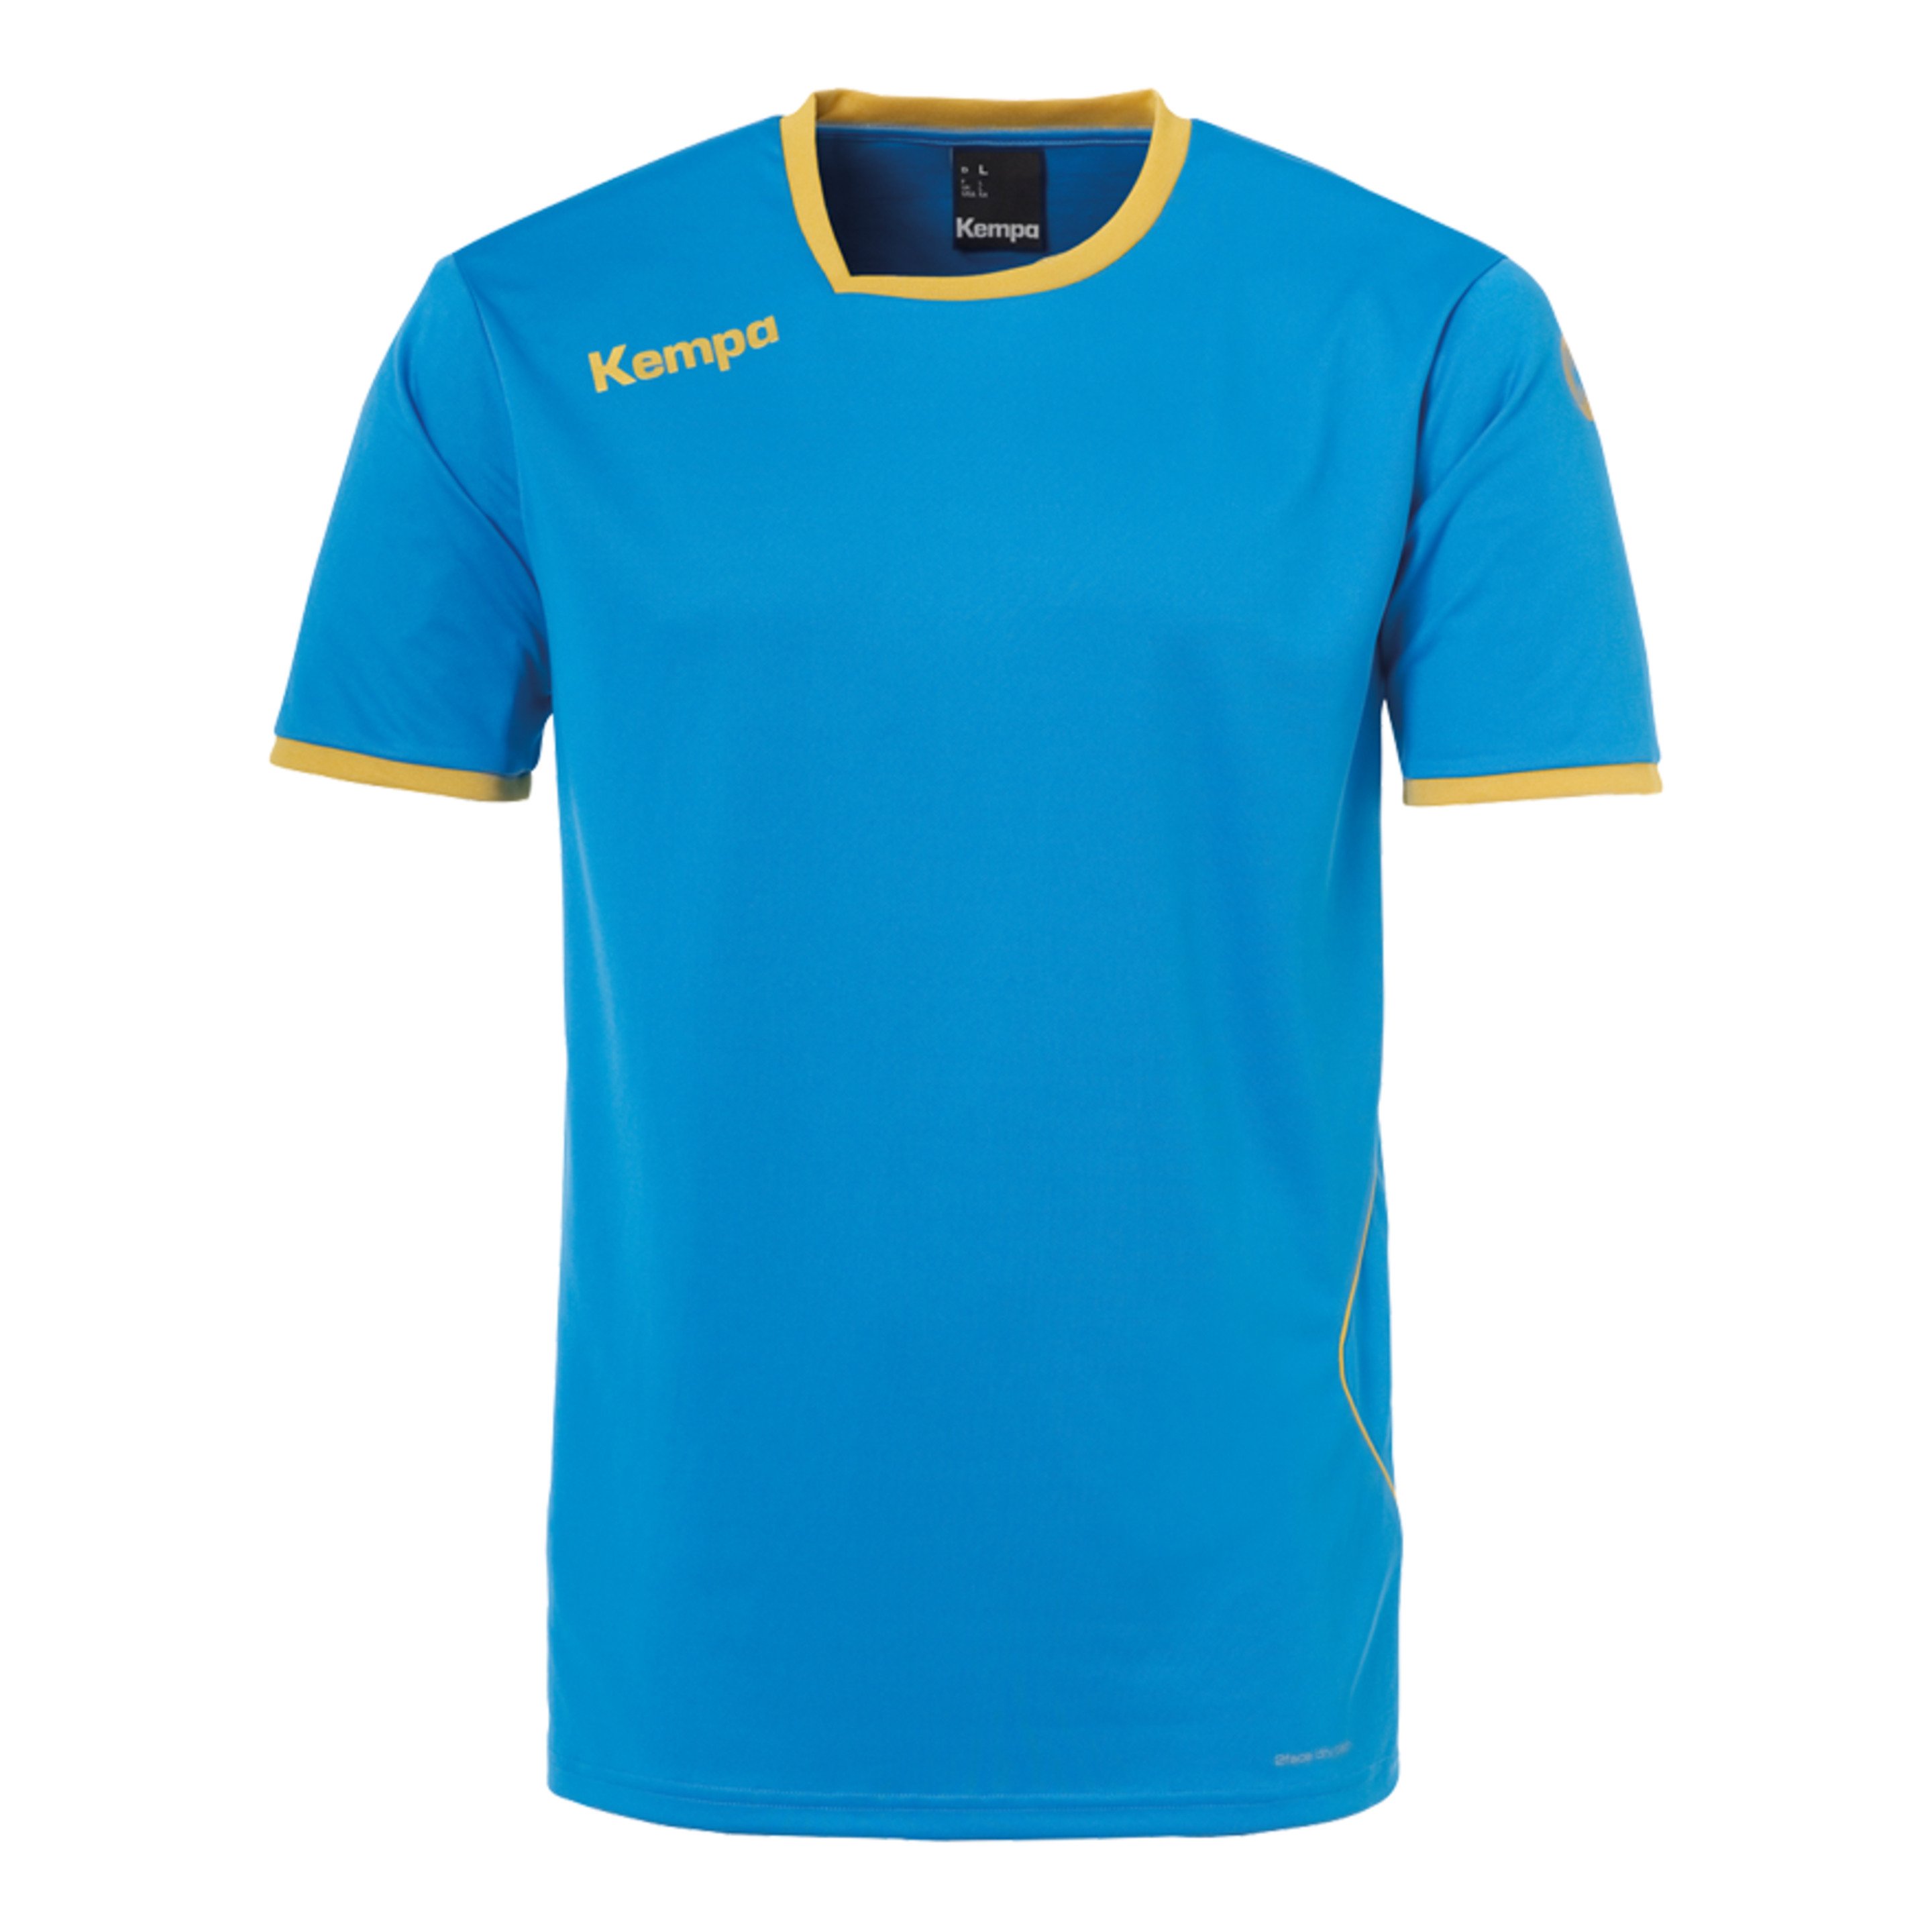 Curve Camiseta Kempa Azul/dorado Kempa - azul - 